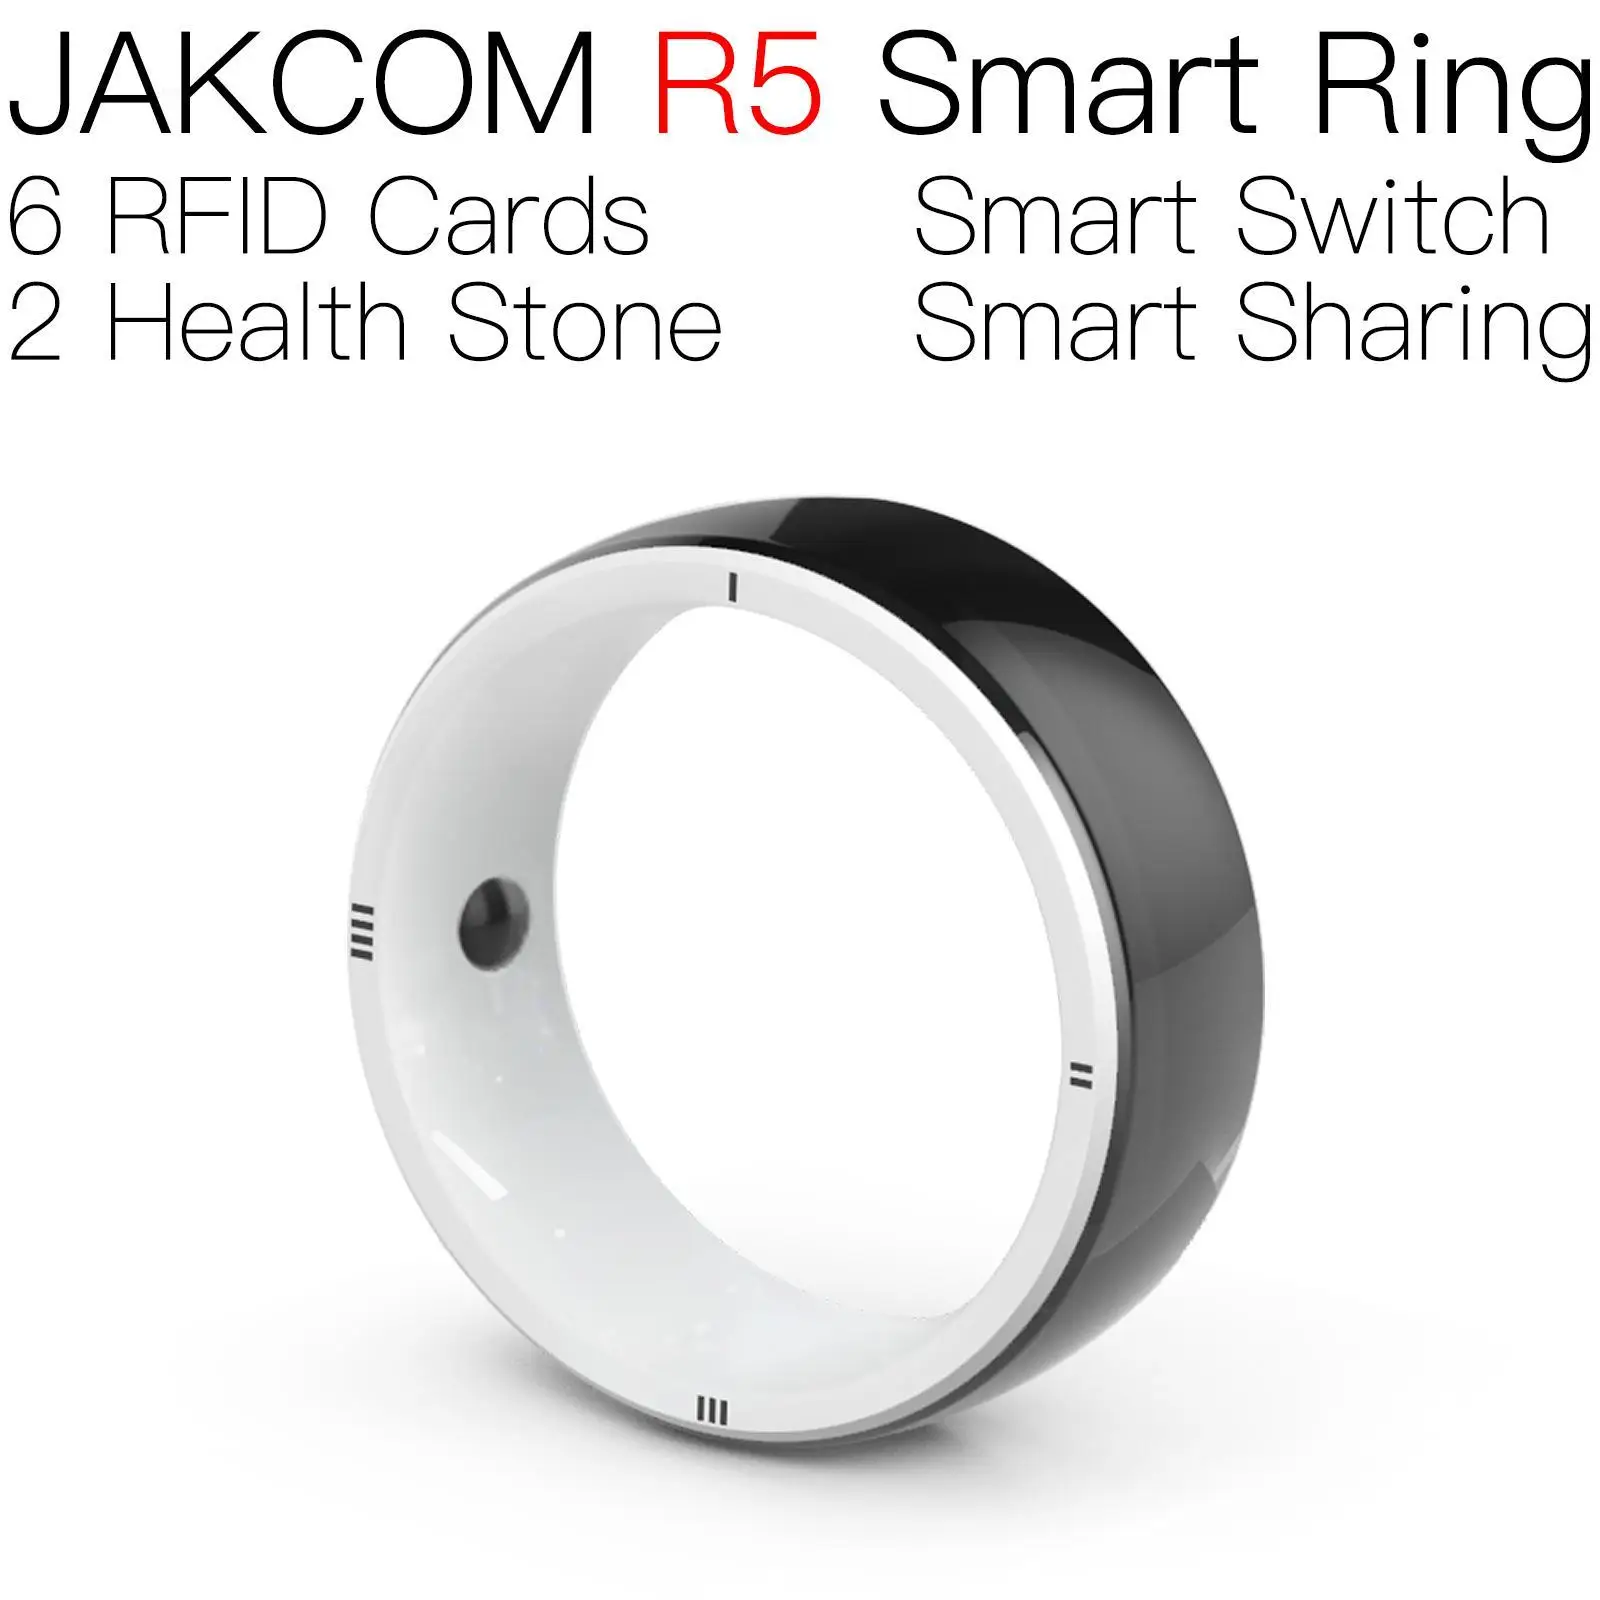 

JAKCOM R5 Smart Ring Super value than timewolf nfc asic 13 56 uid scnner microchip 125khz rfid cardd access control system